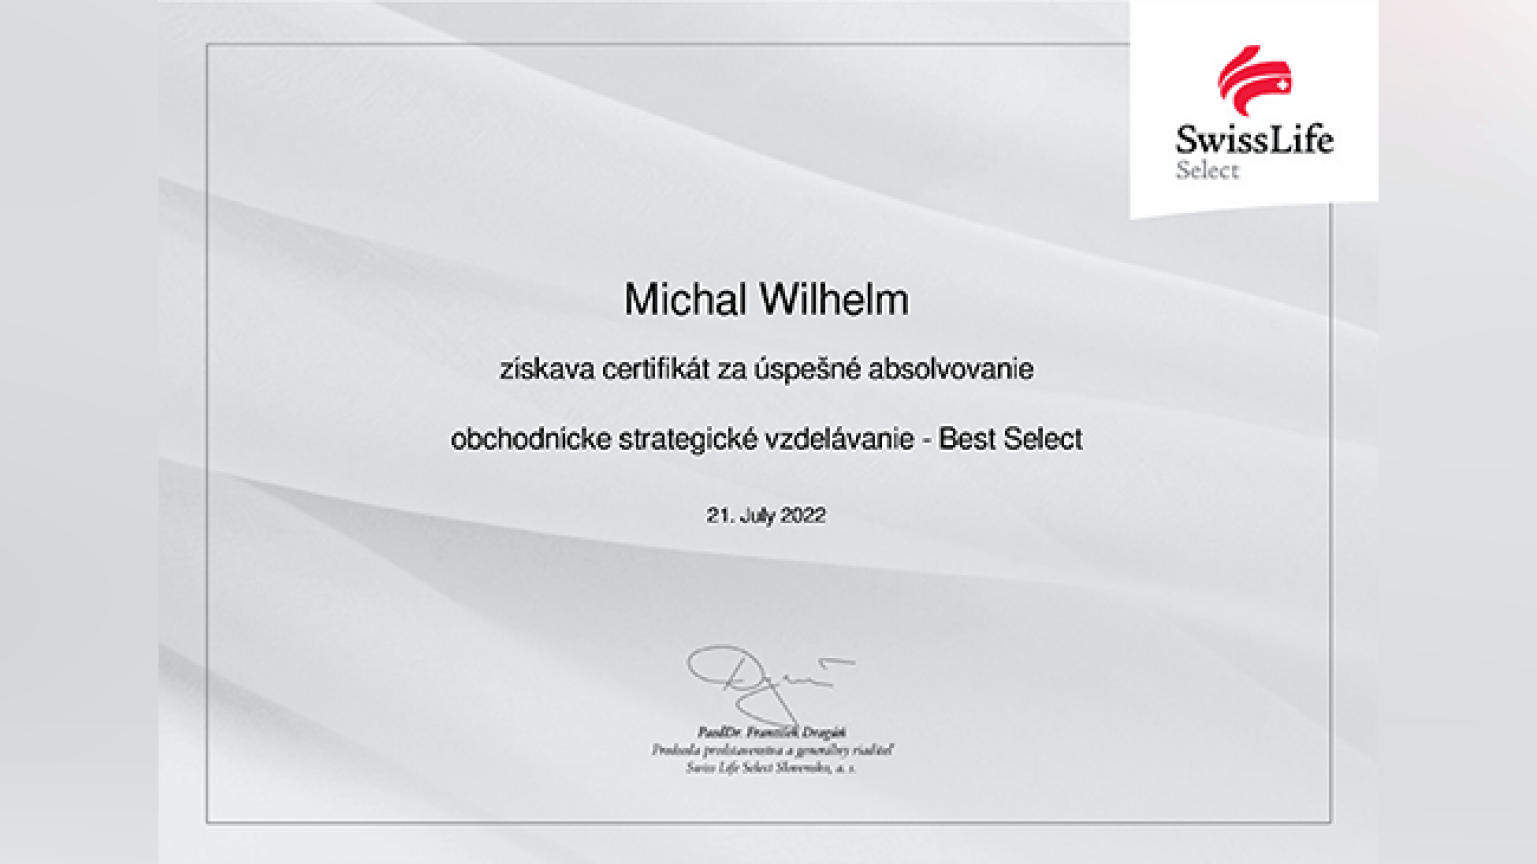 Michal Wilhelm